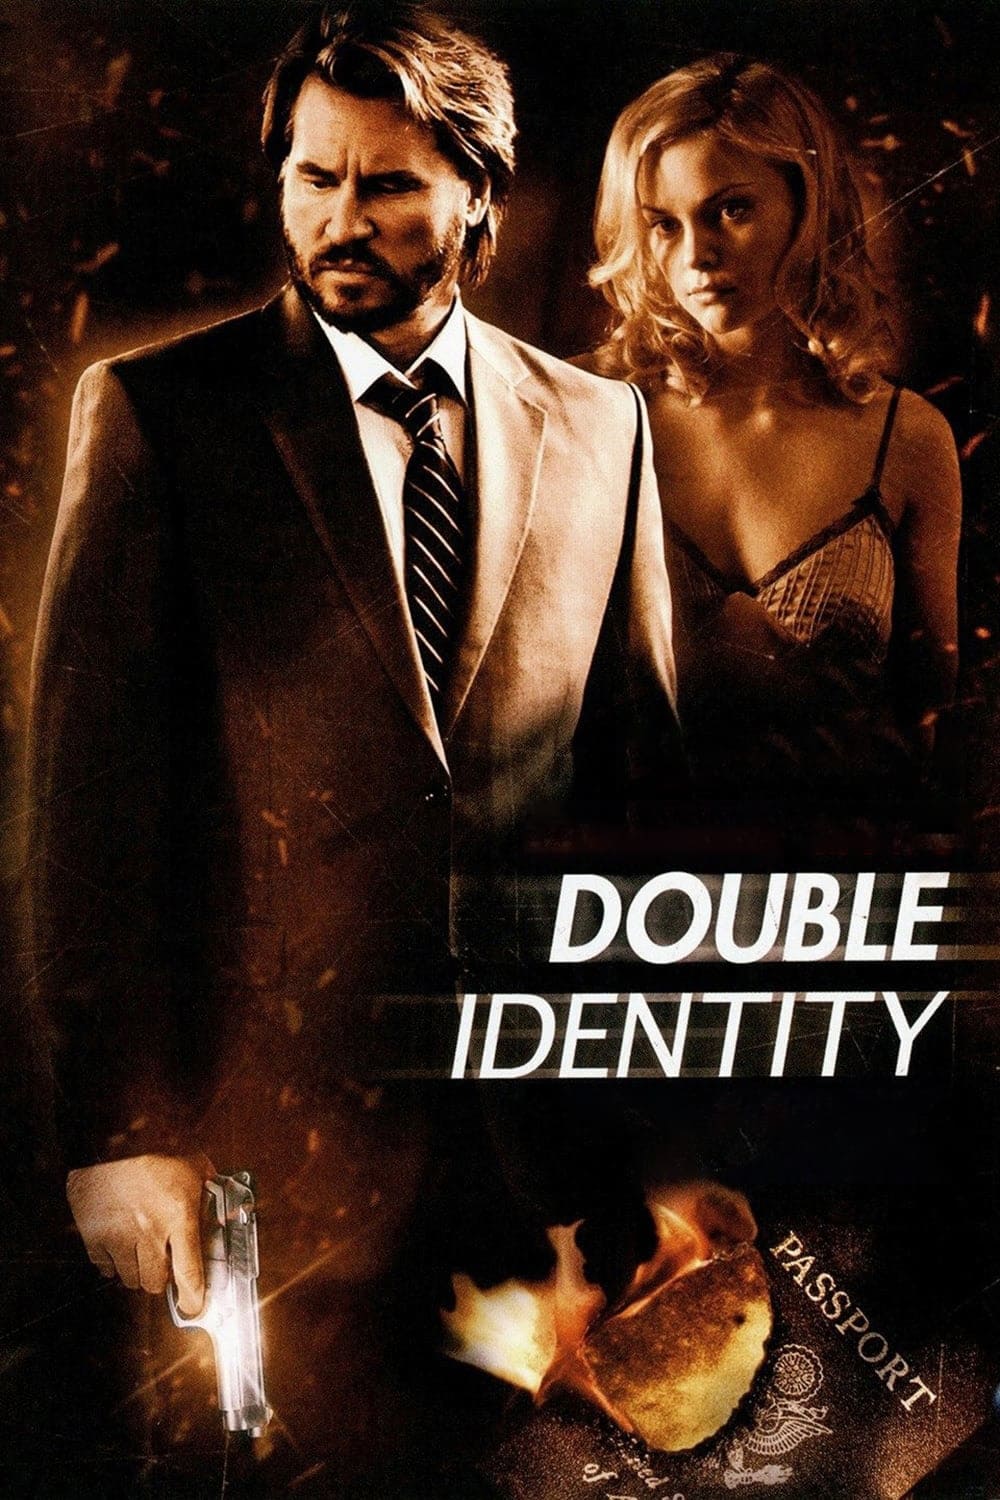 Double Identity [HD] (2009)